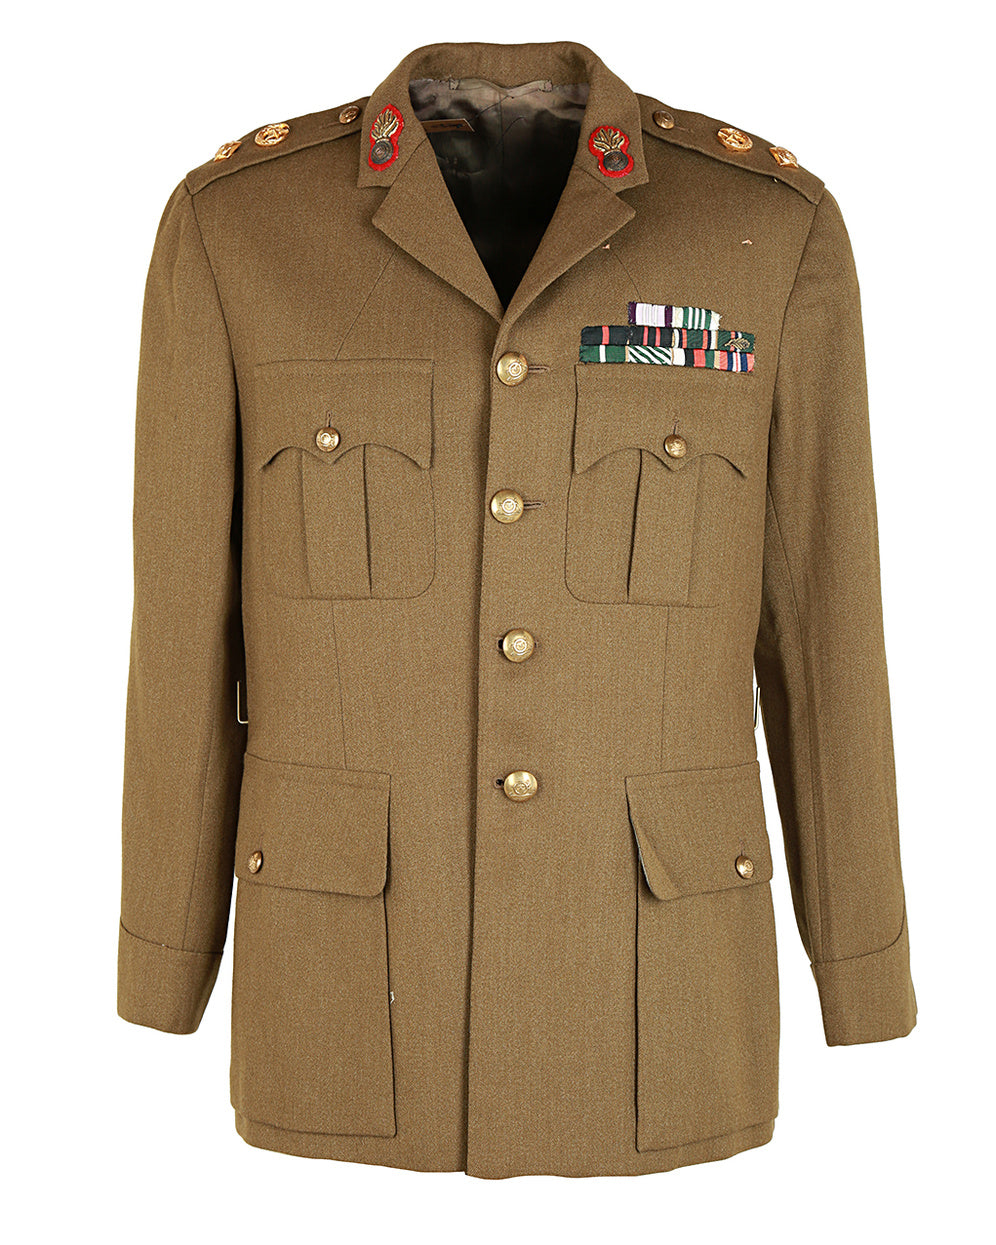 Stunning 1950s Swedish Army Highly Decorated Dress Tunic Jacket - Medium